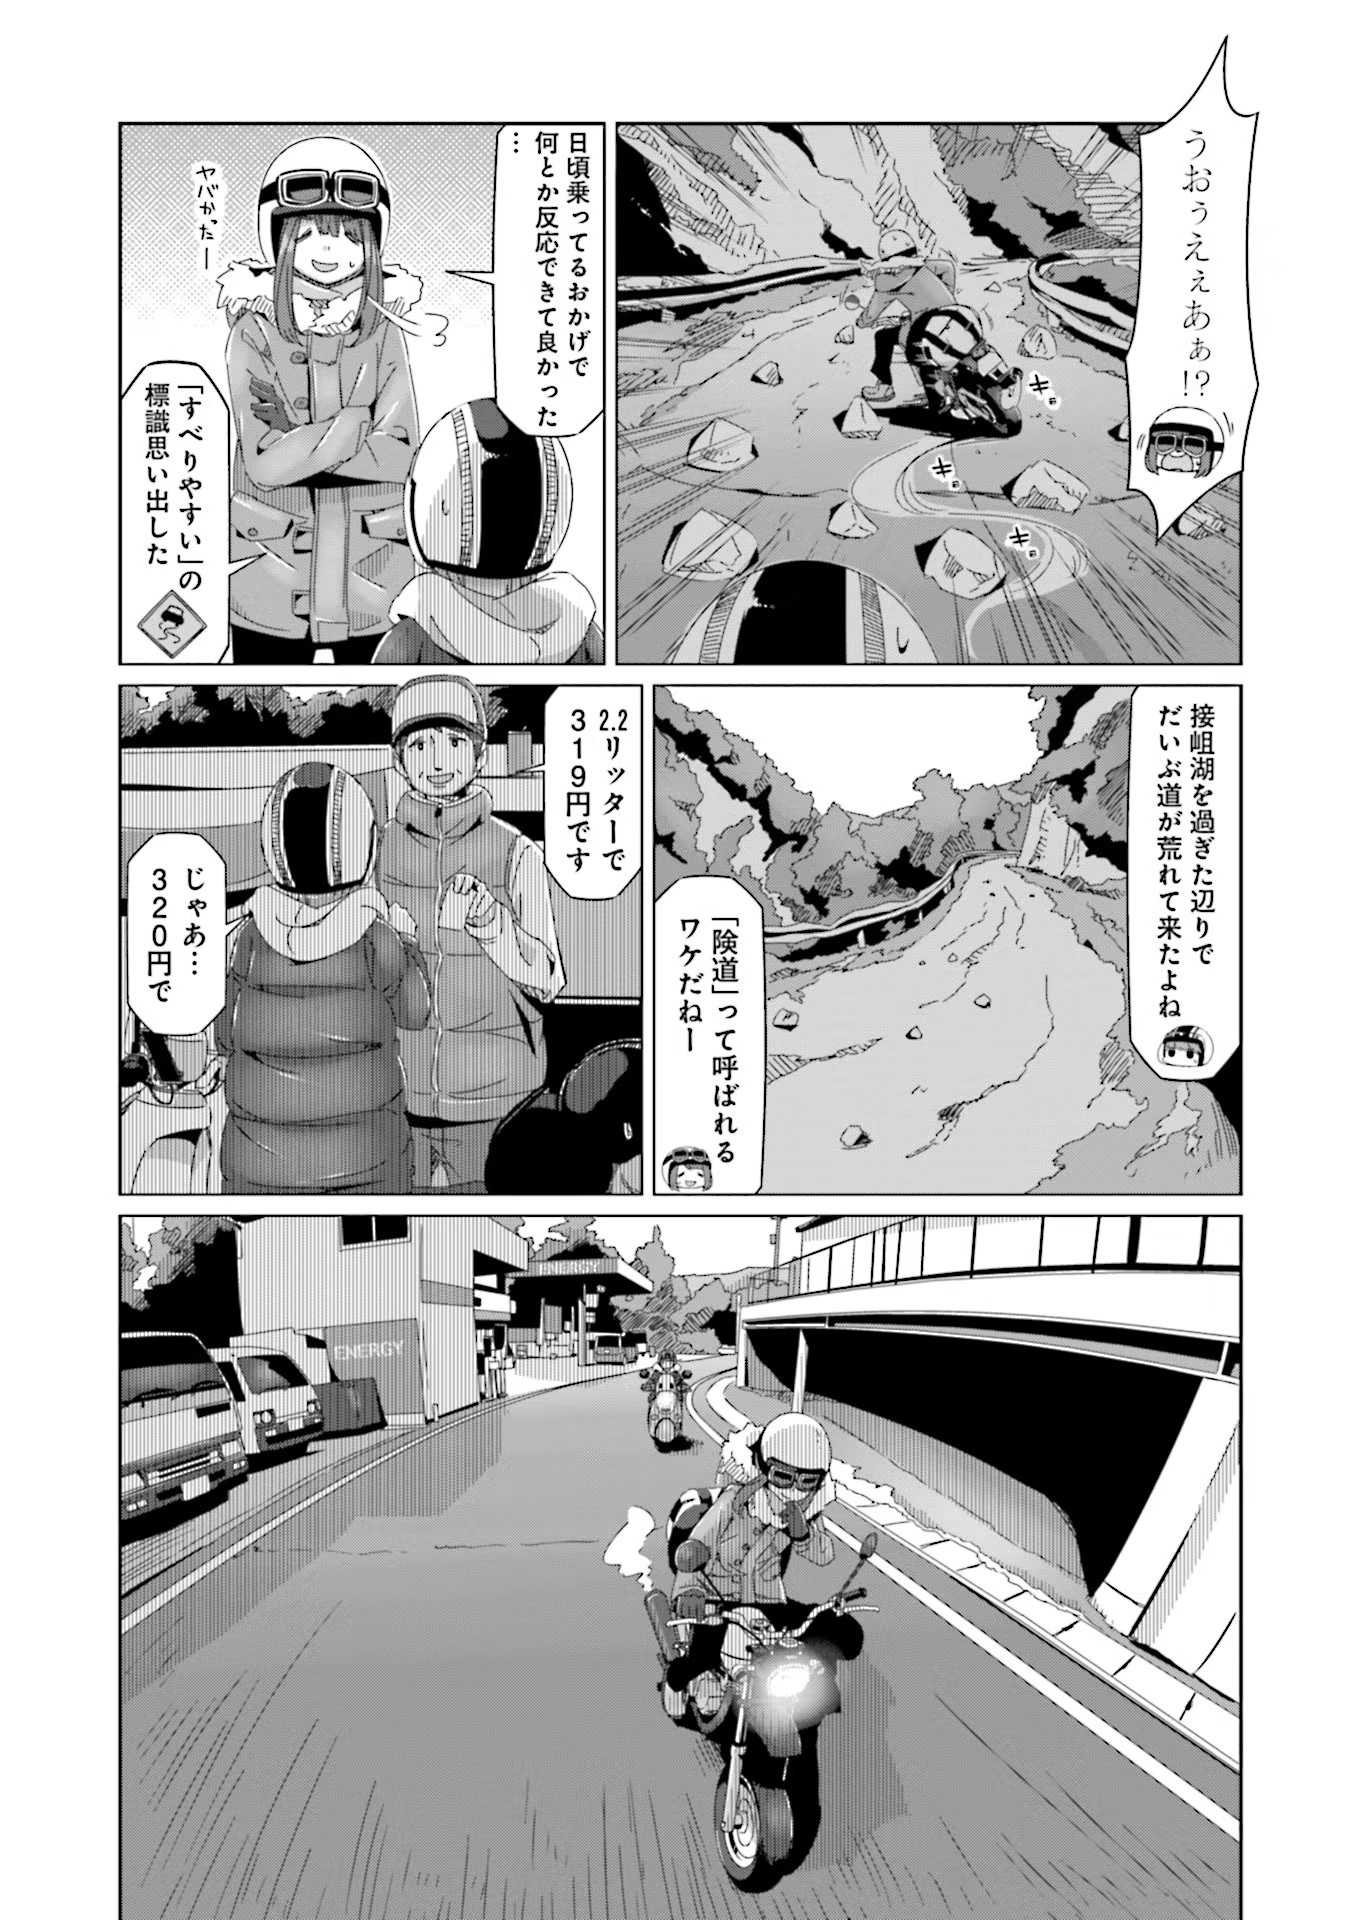 Yuru Camp - Chapter 59 - Page 2